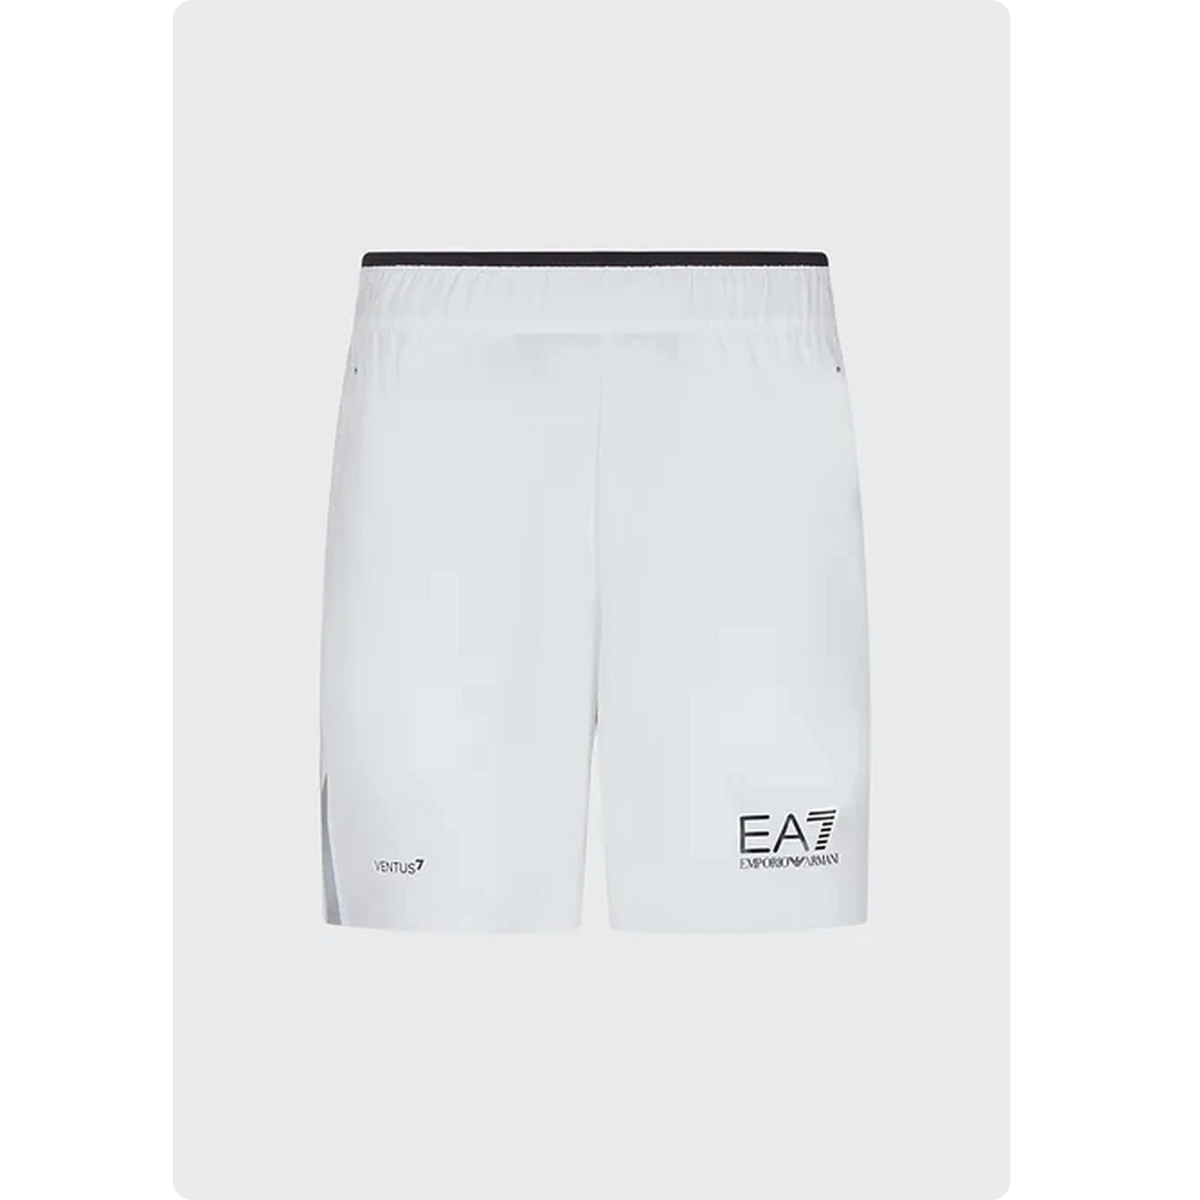 EA7 Giorgio Armani - Man Woven Shorts - Oxford Tan